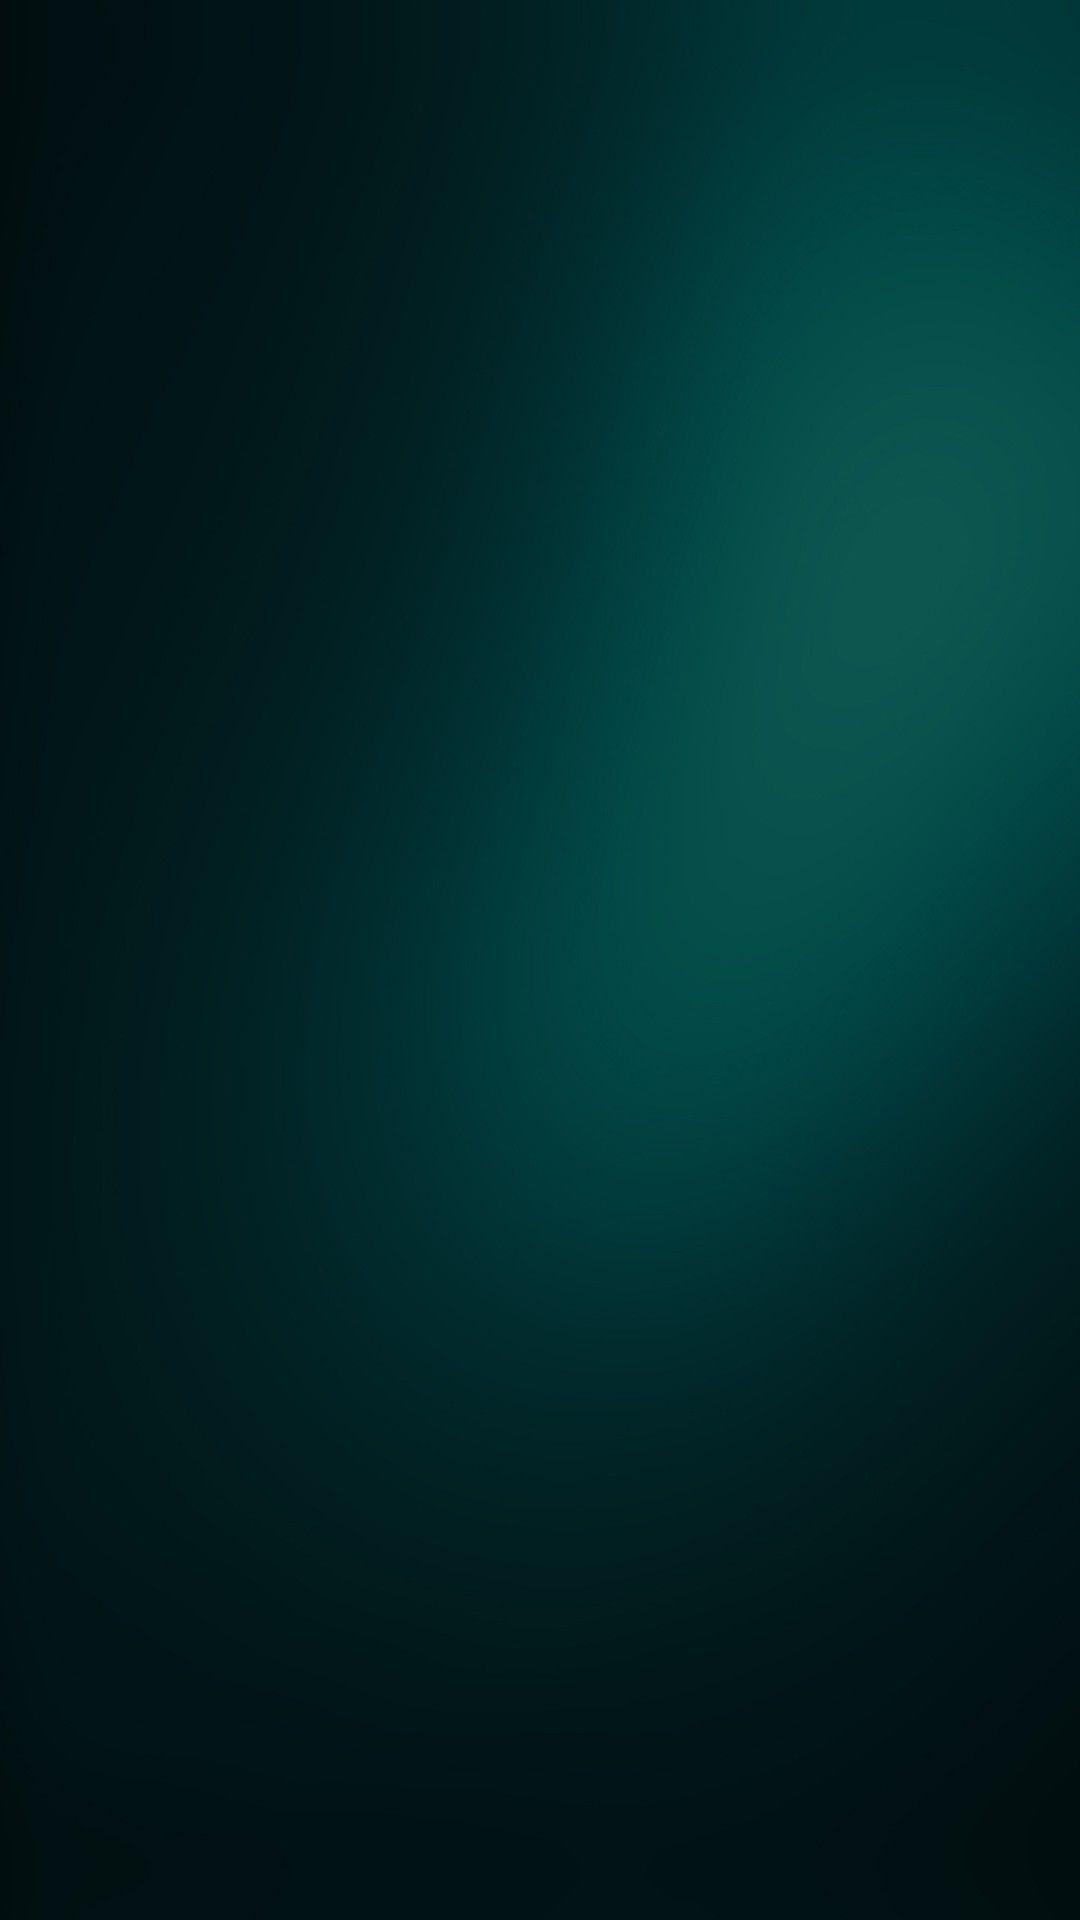 Dark Blue Green Wallpapers - Top Free Dark Blue Green Backgrounds